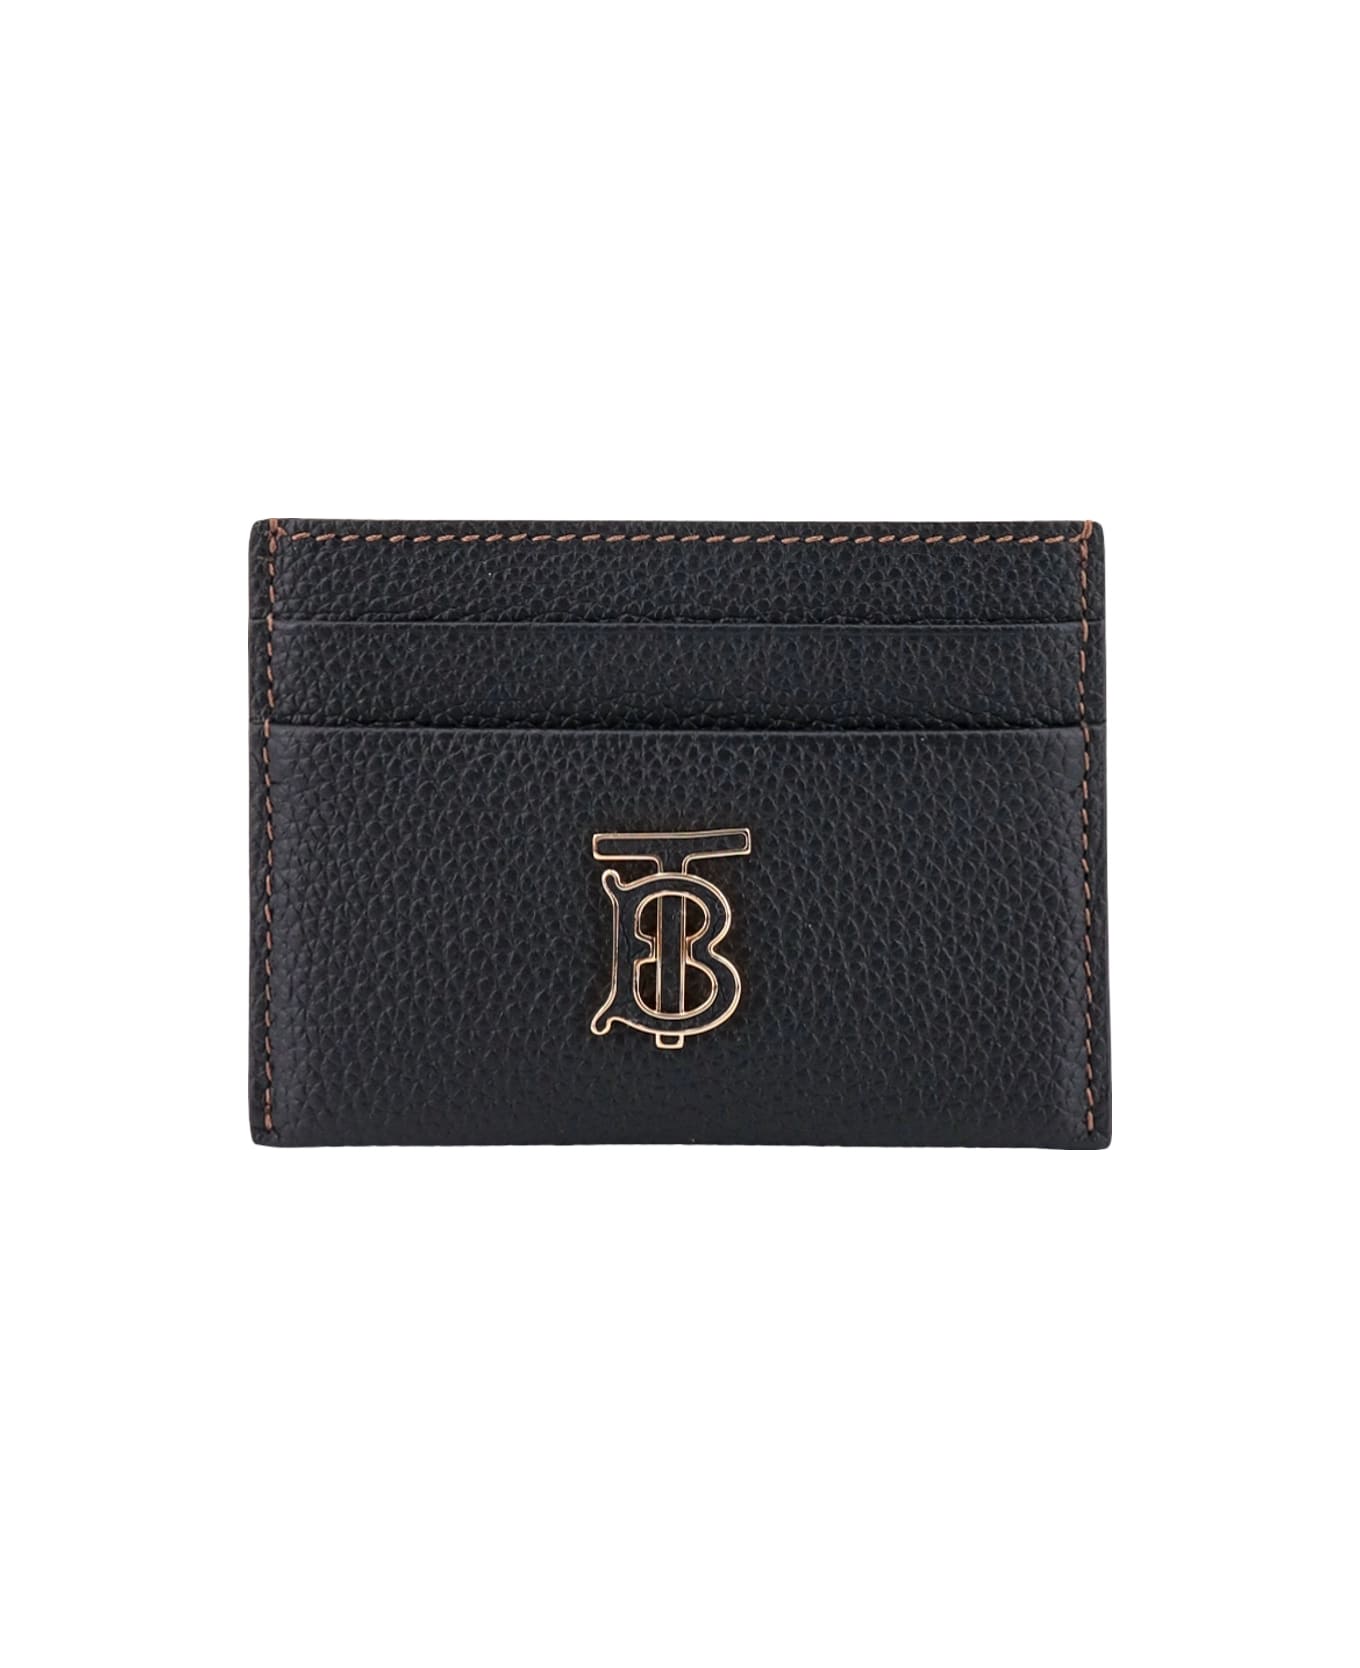 Burberry Tb Lgl Card Case - Black